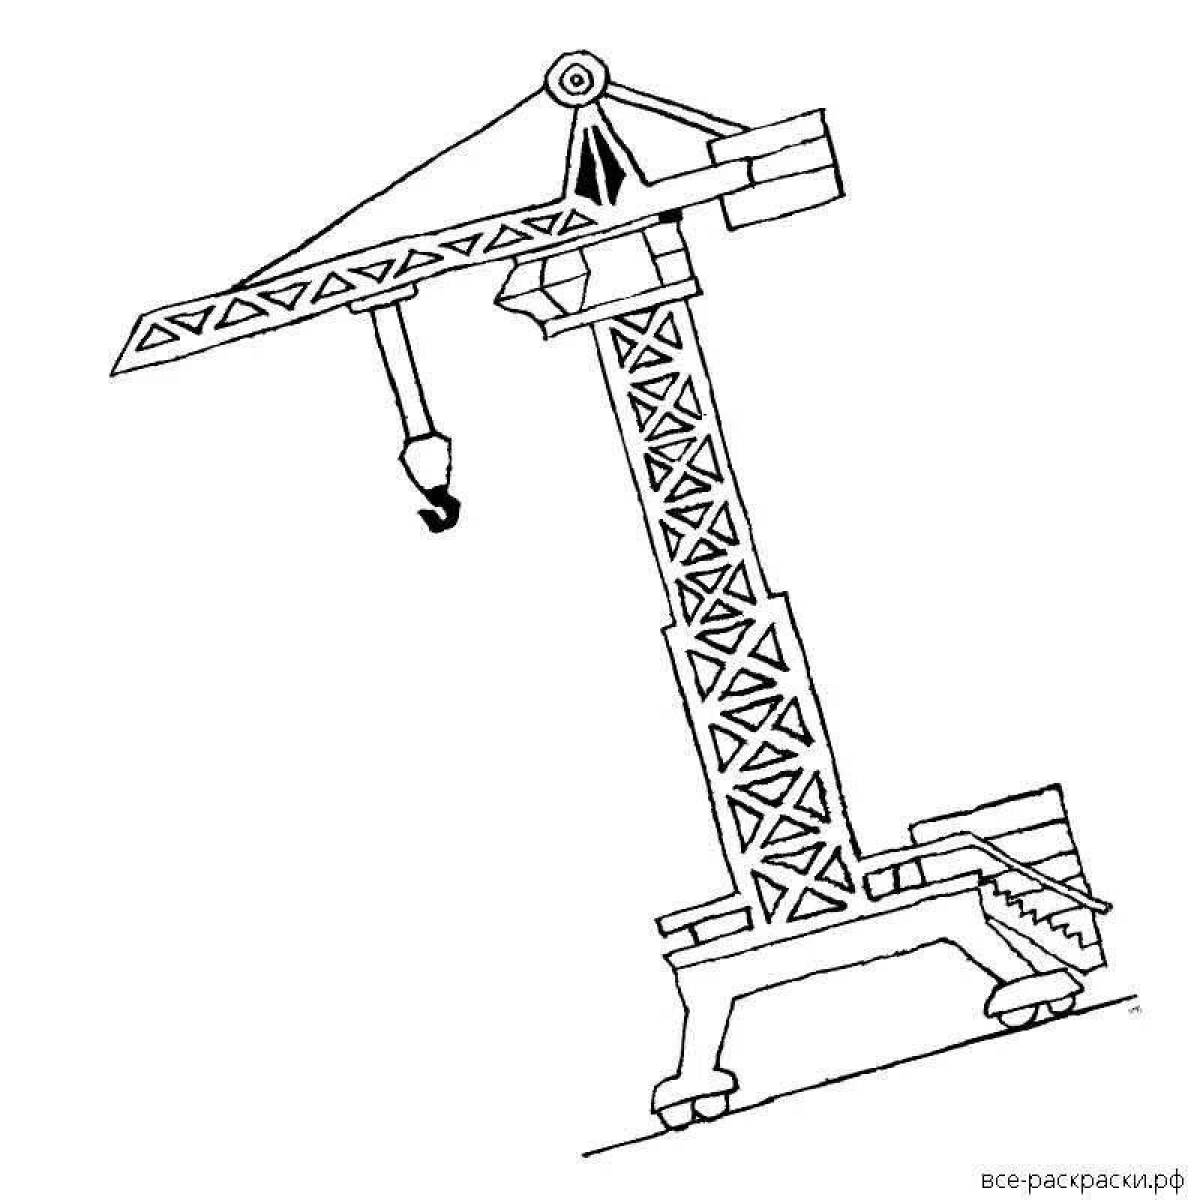 Tower crane #28